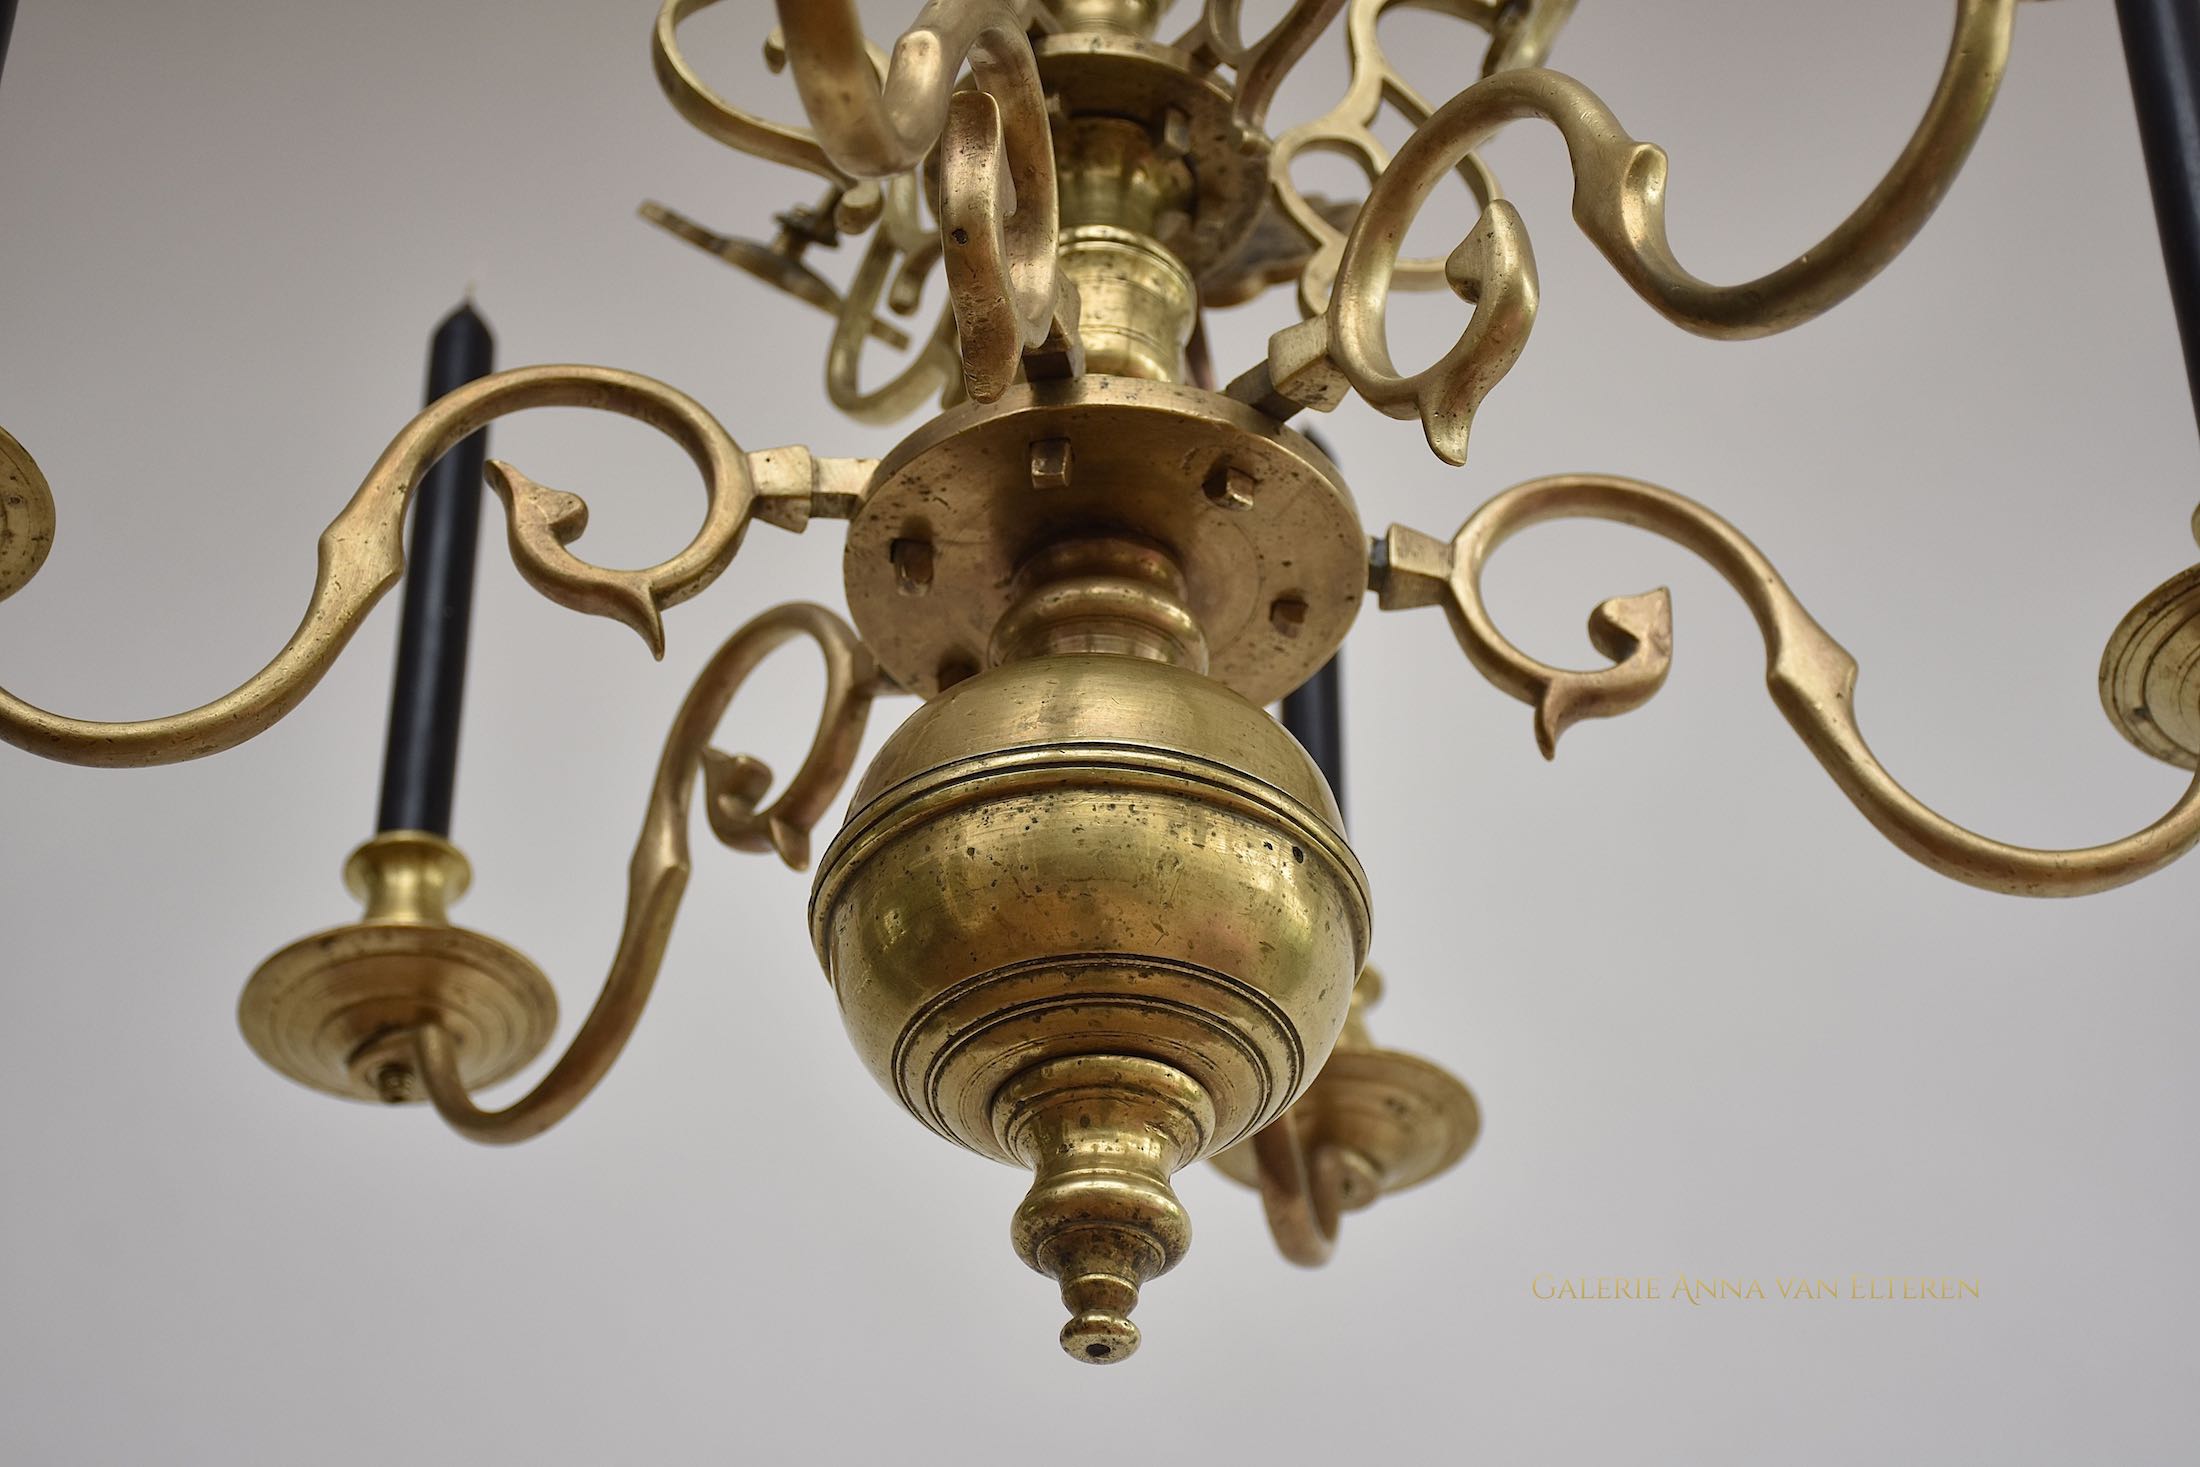 Antique bronze candle chandelier